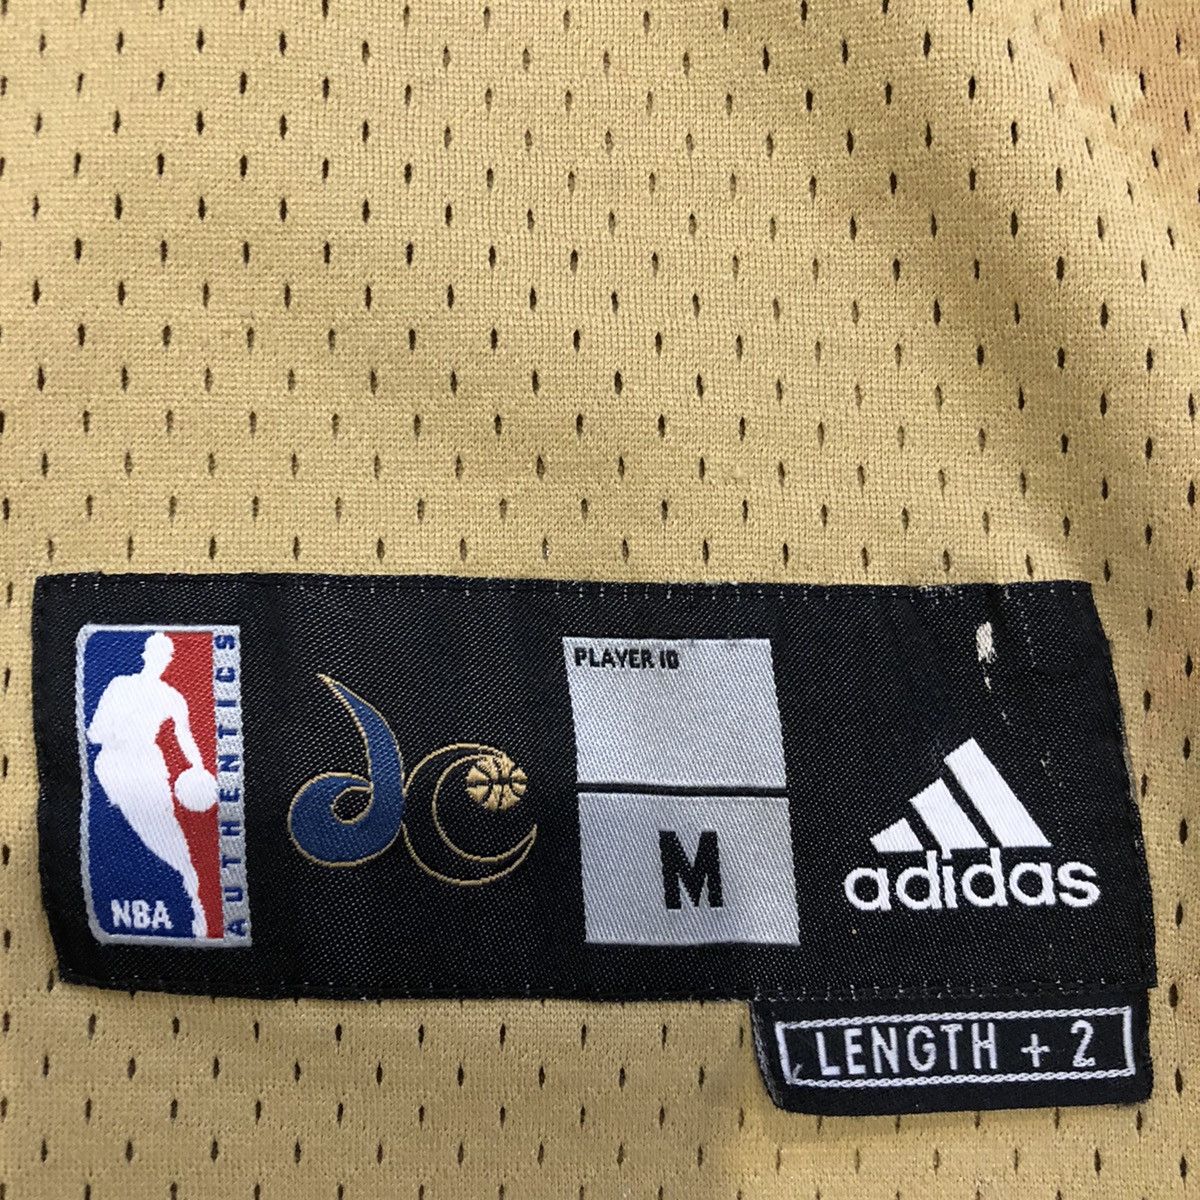 Adidas Vintage Adidas Gilbert Arenas Washington Wizards NBA Jersey Size US M / EU 48-50 / 2 - 9 Thumbnail